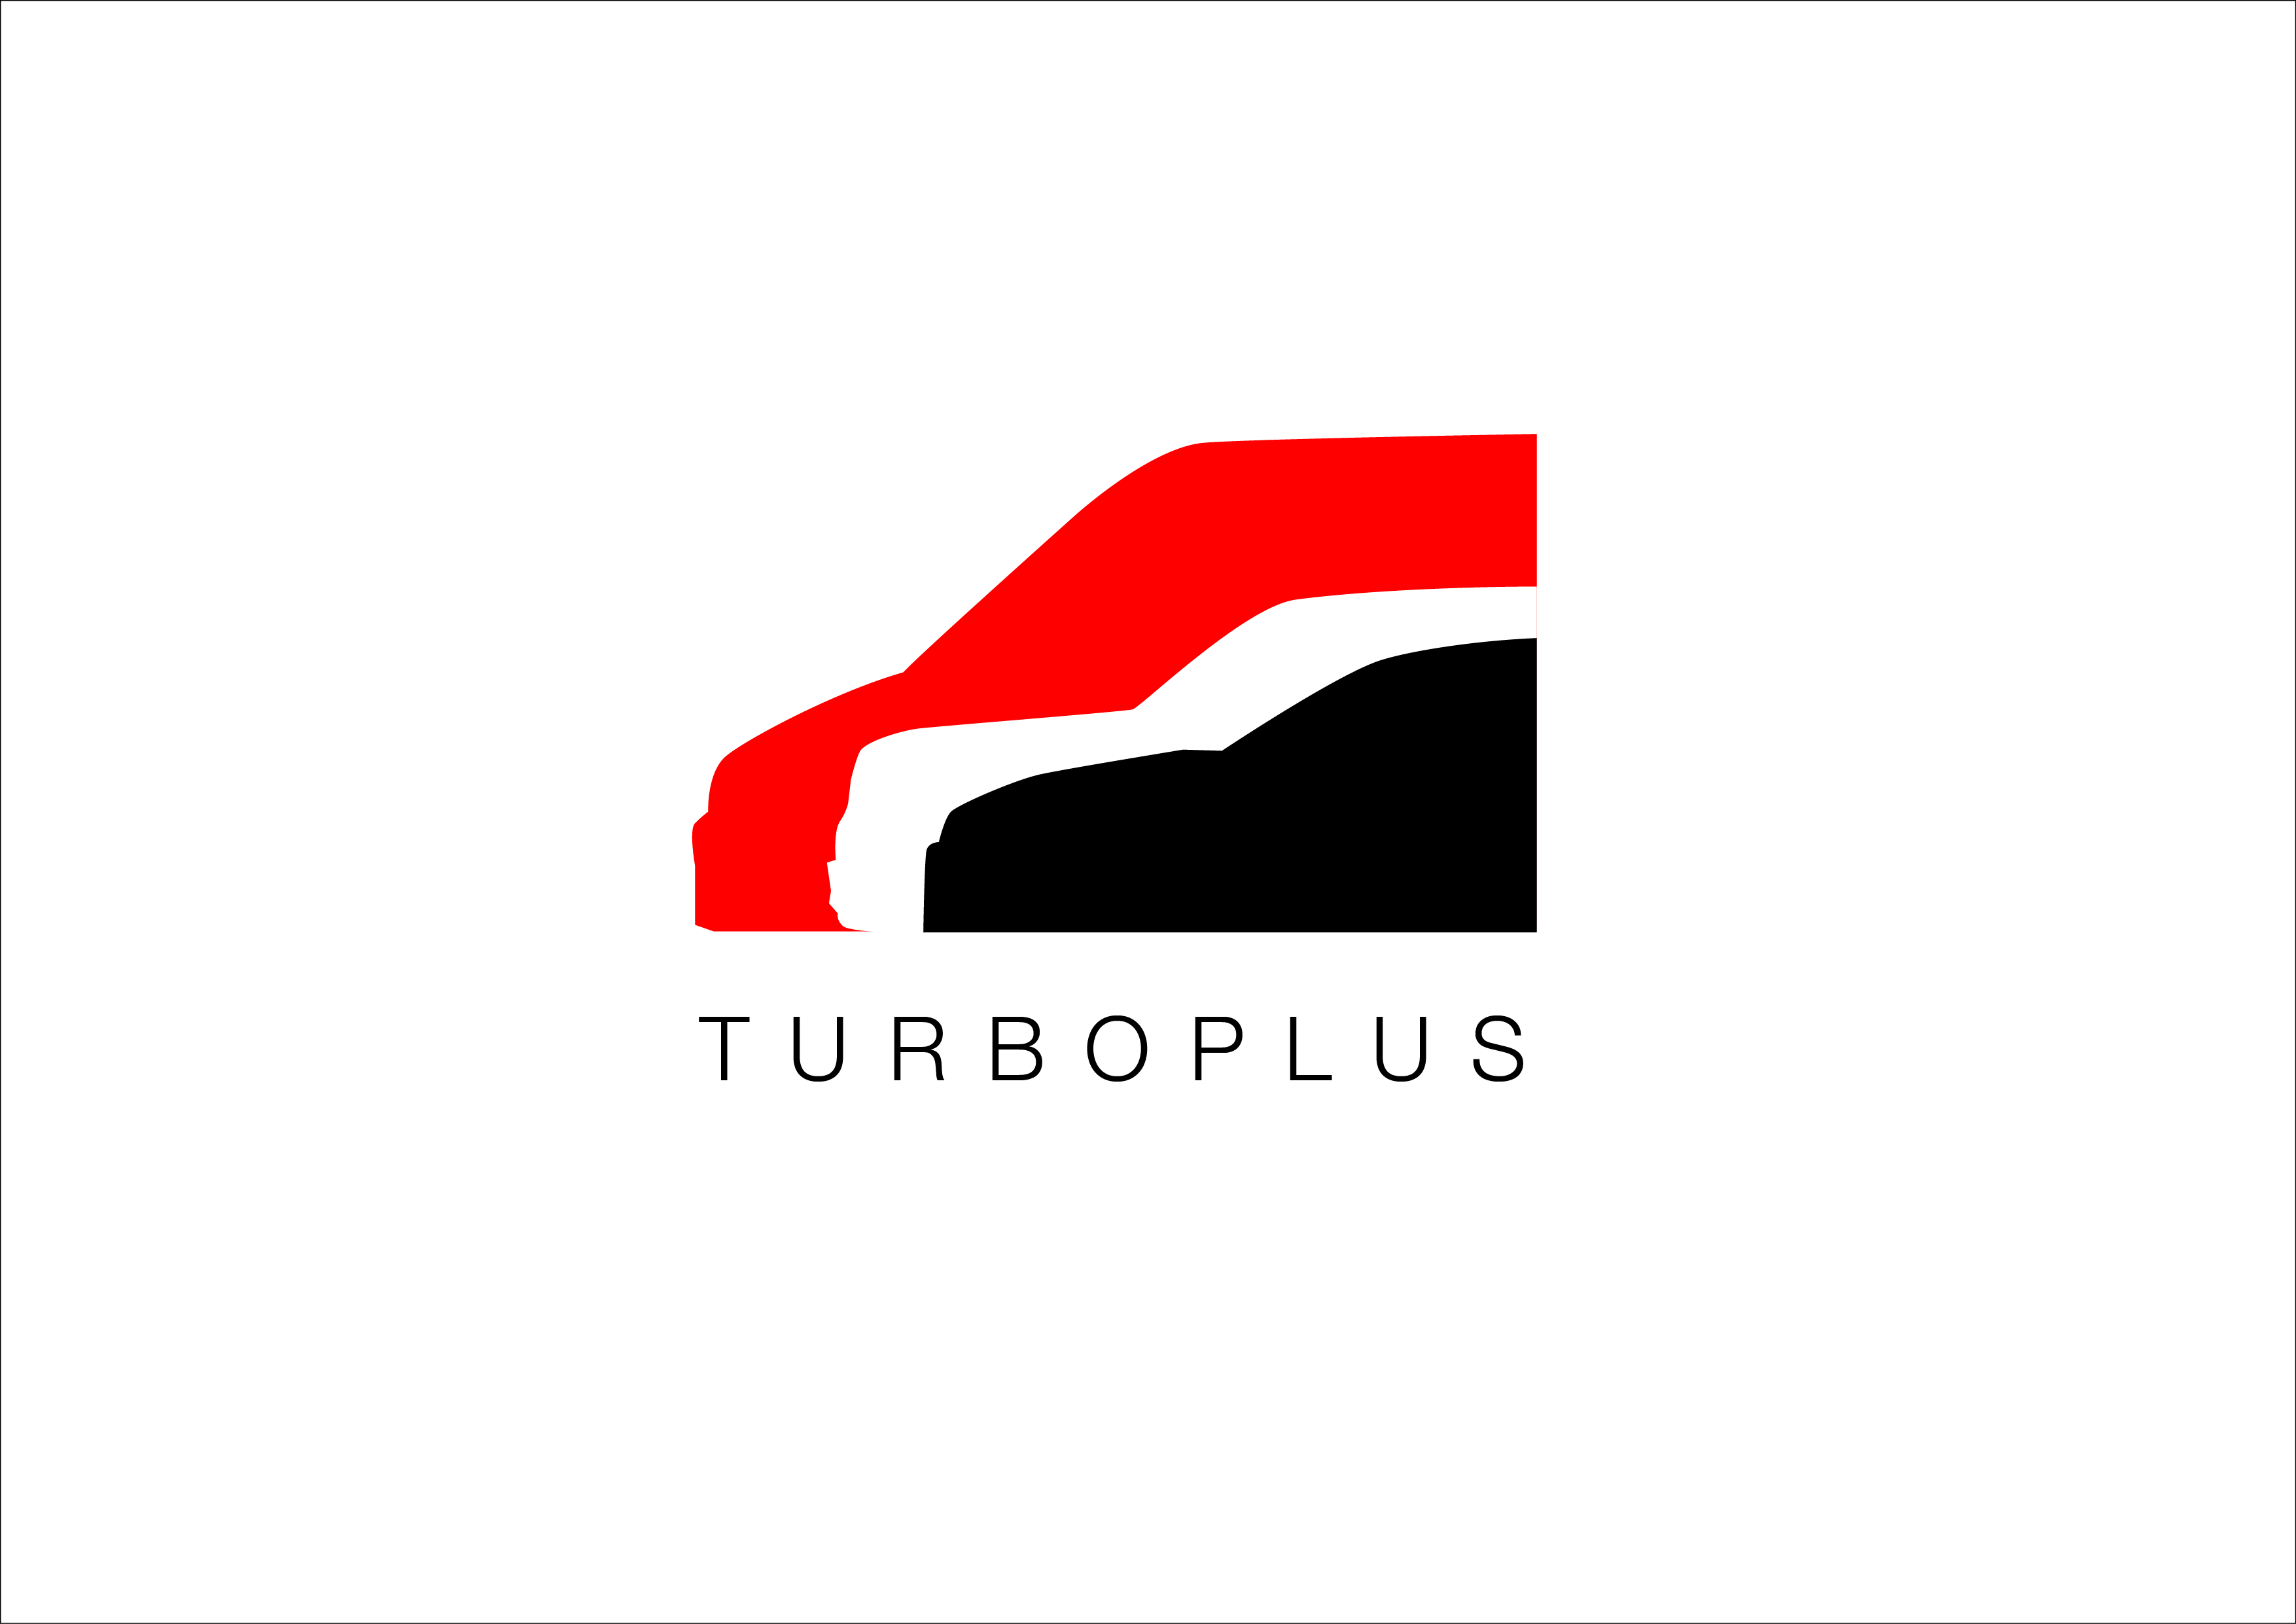 Логотип продавца